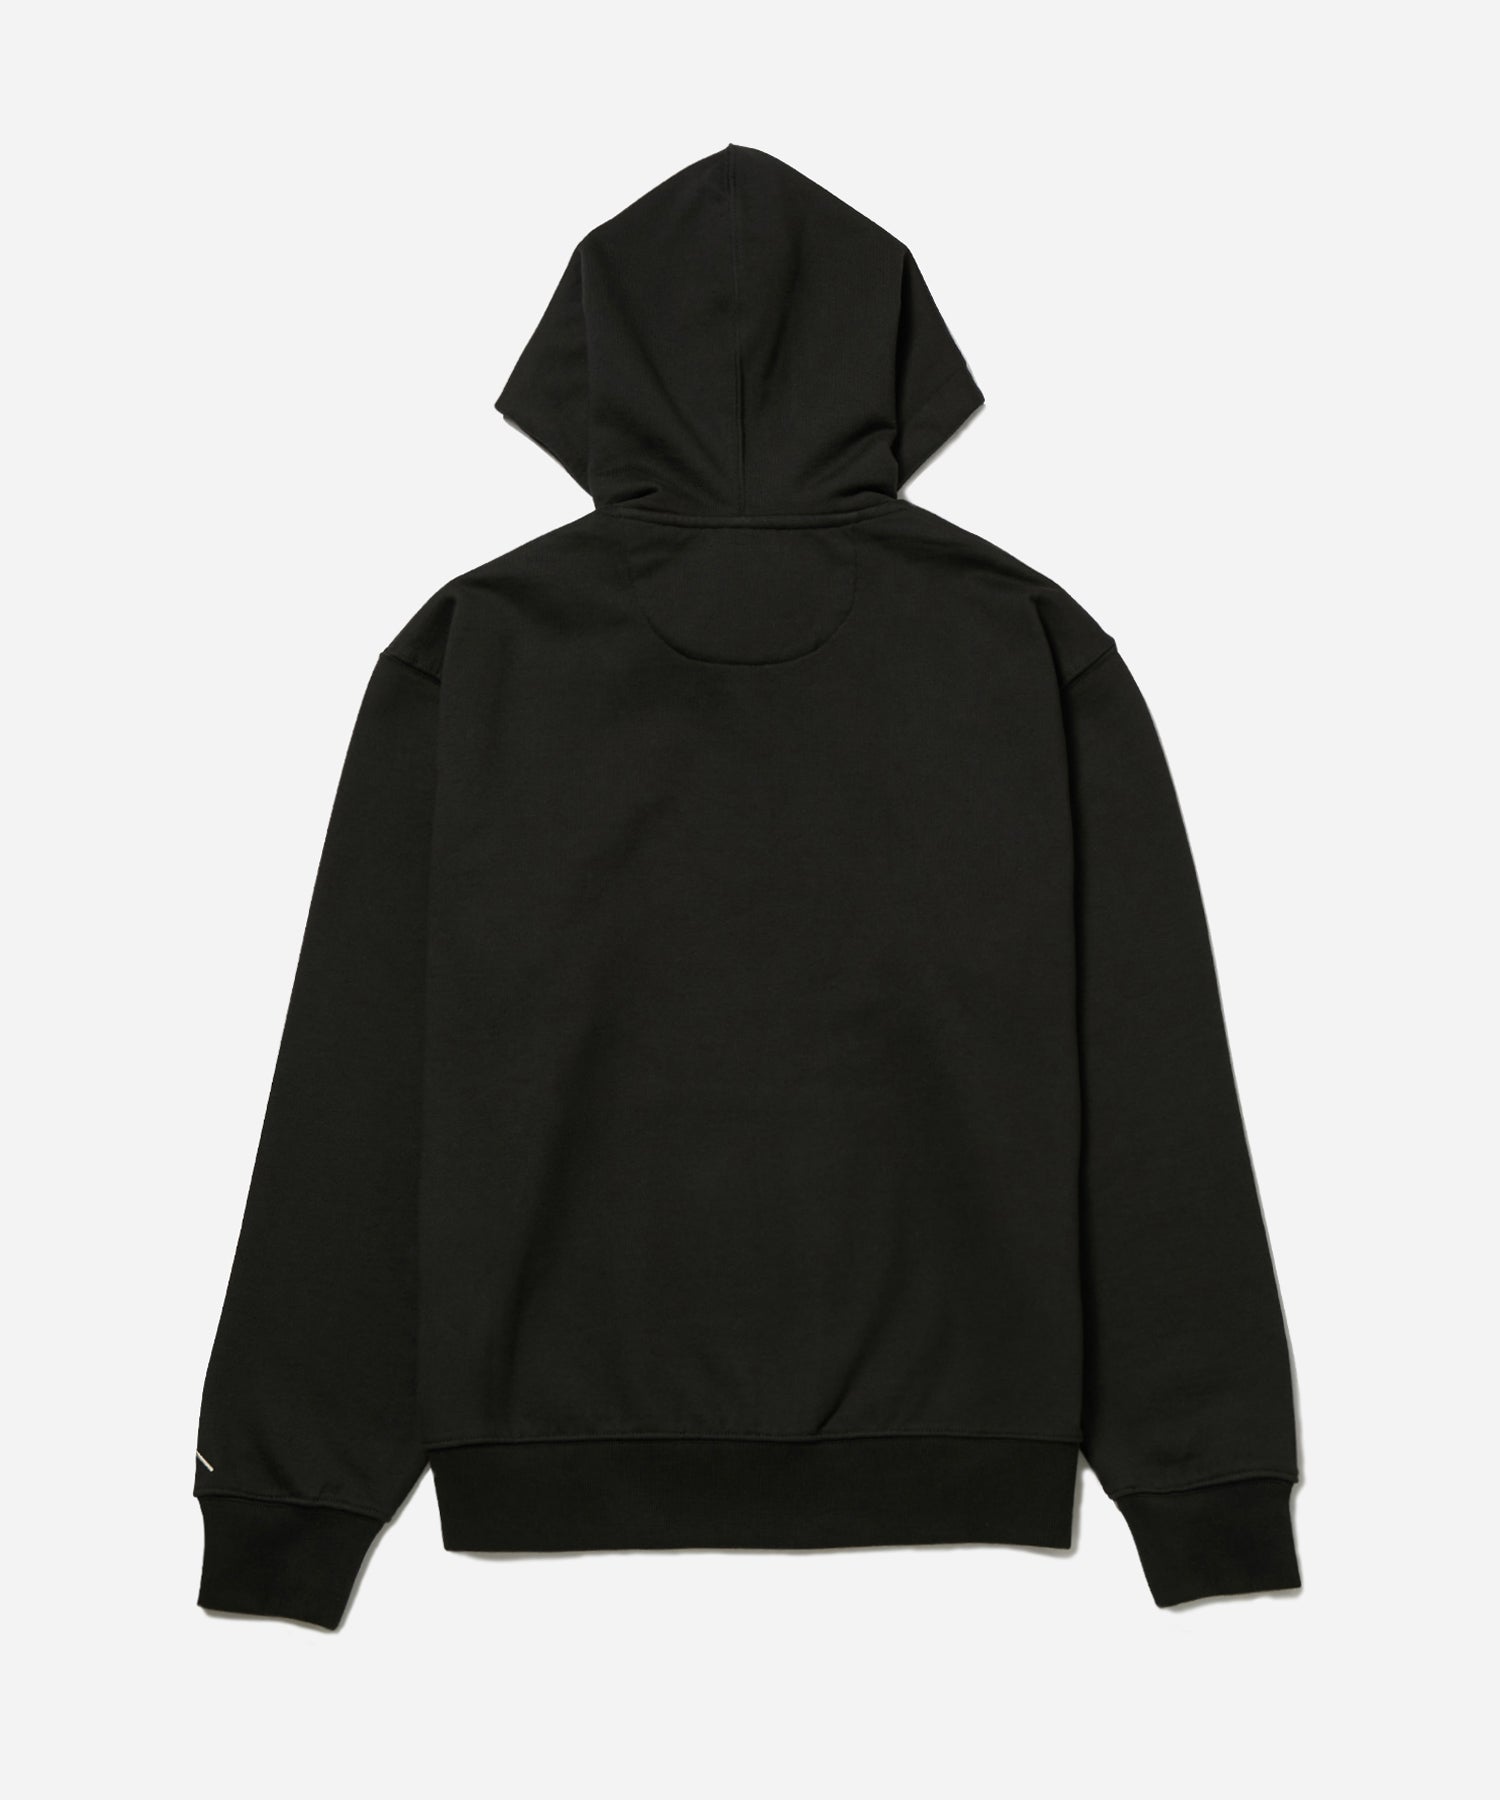 niceshop ttt msw nice hoodie black売れなければ着る予定なので